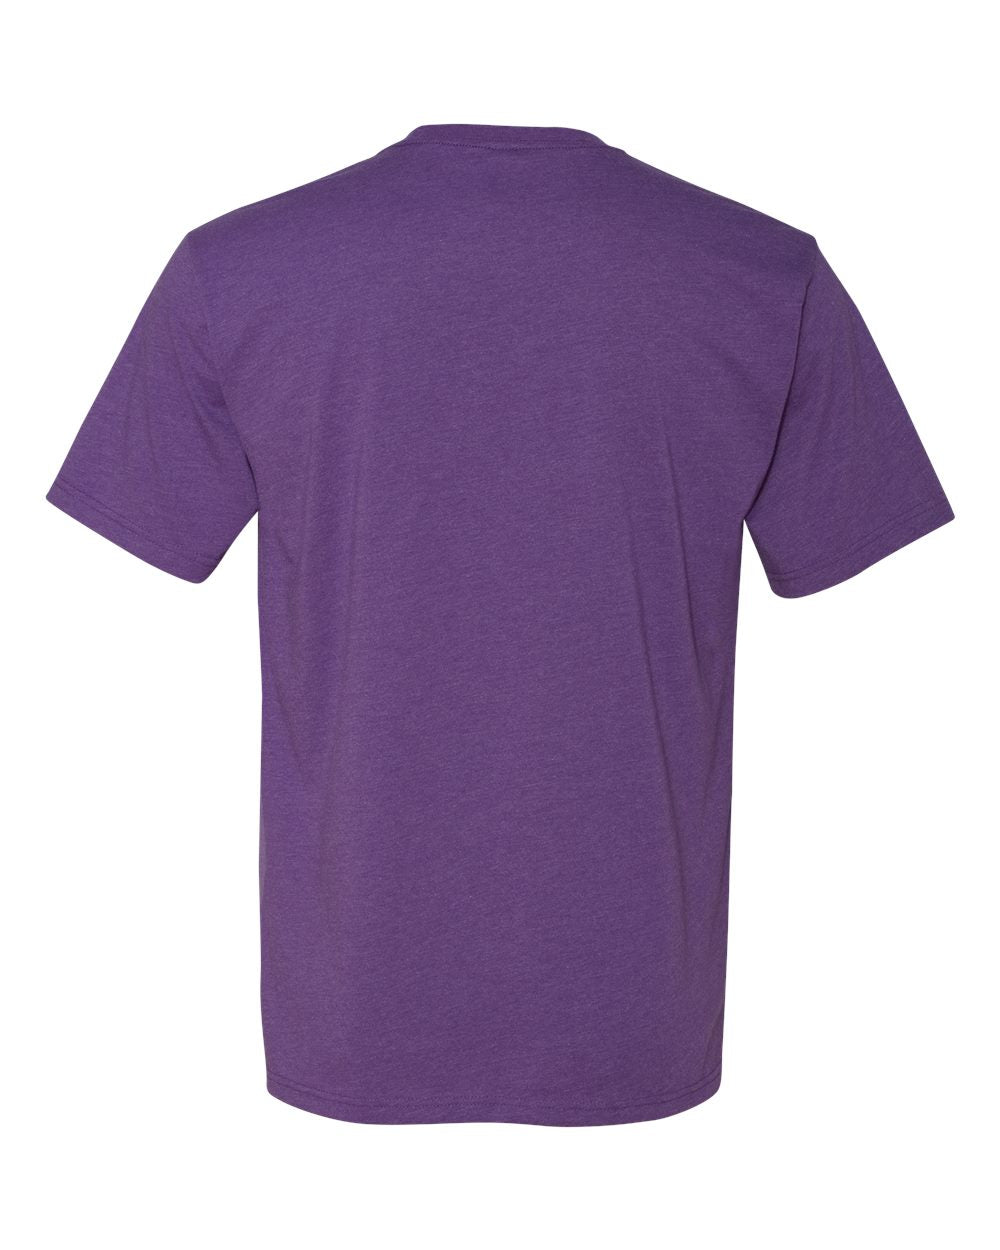 Grand Canyon University Purple GCU T-Shirt from Nudge Printing - Back